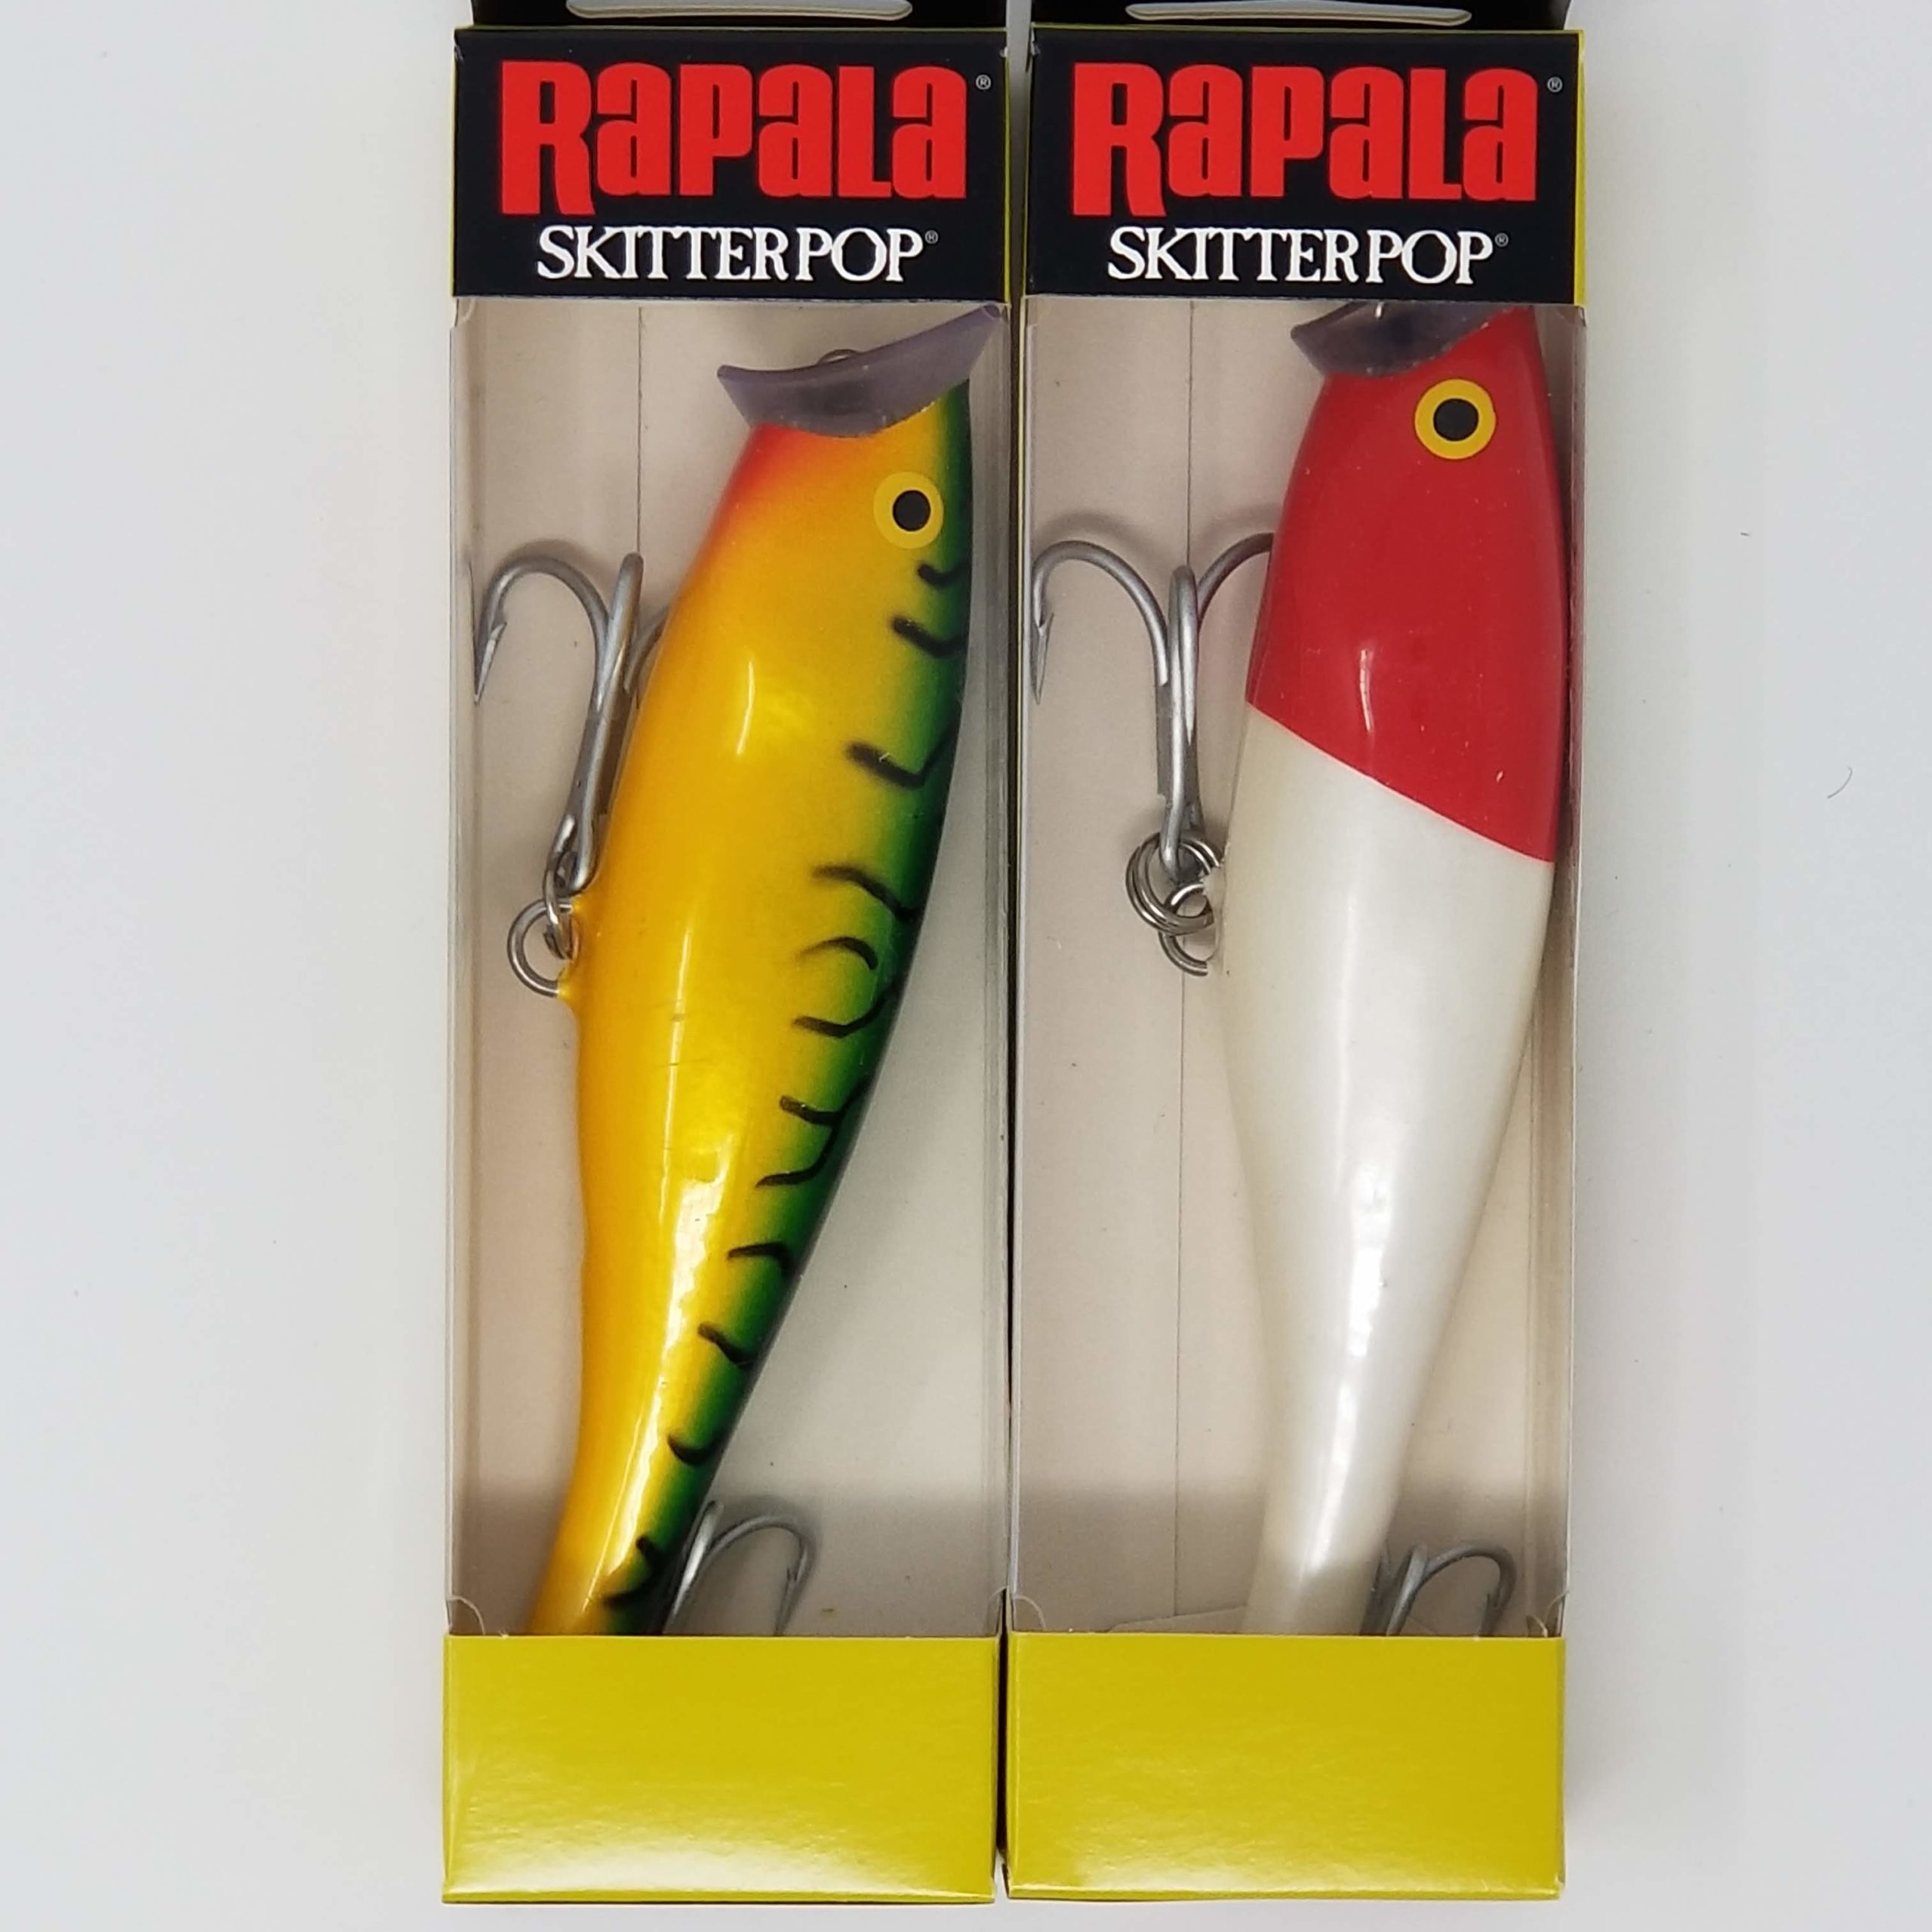 5cm Rapala Skitter Pop® Fishing Lure 6g